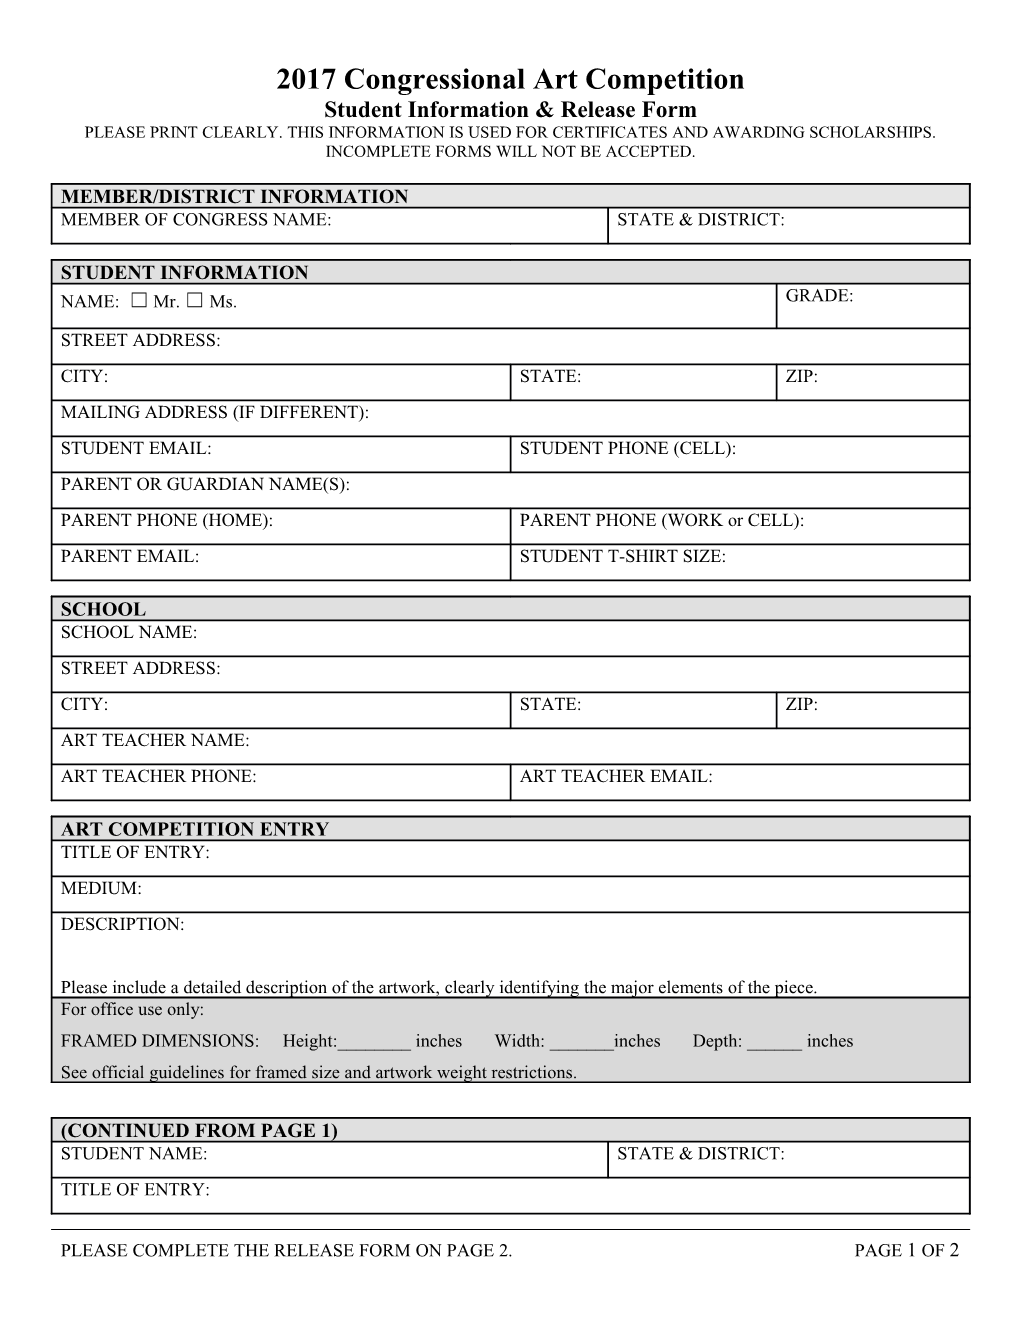 Student Information & Release Form